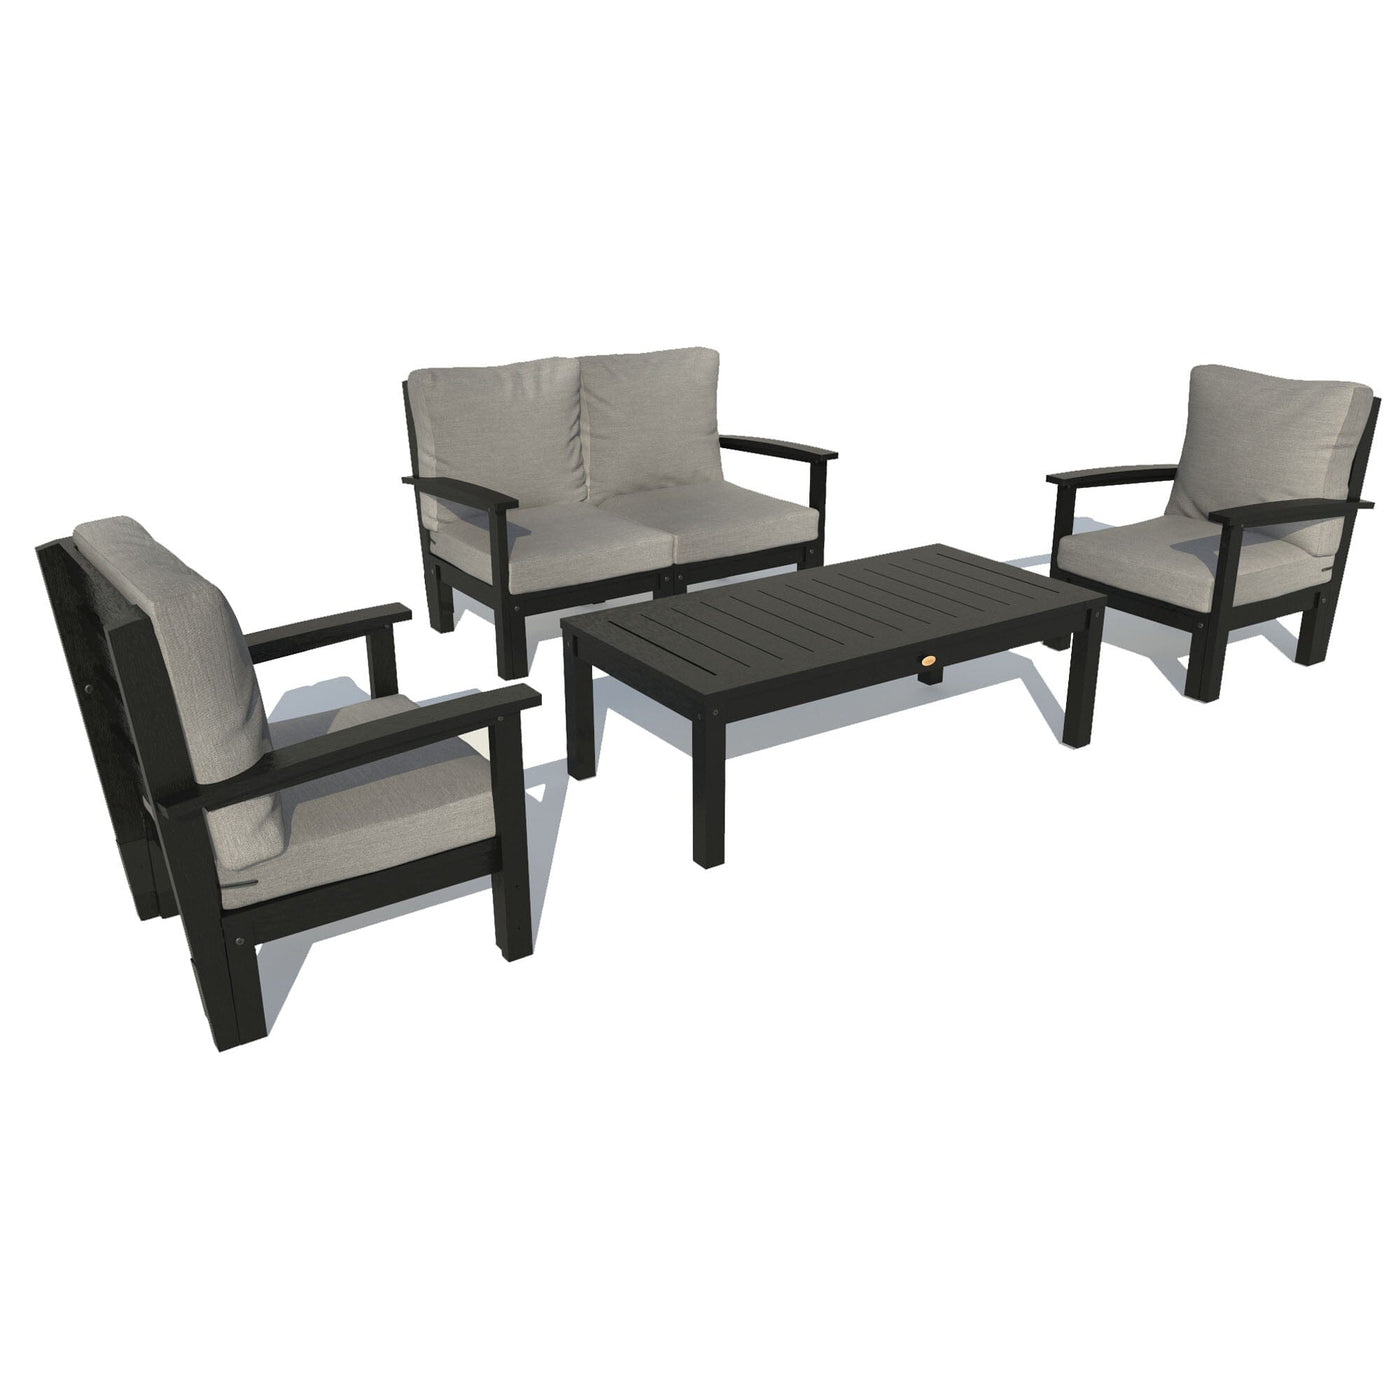 Bespoke Deep Seating: Loveseat, 2 Chair Set, and Conversation Table Deep Seating Highwood USA Stone Gray Black 